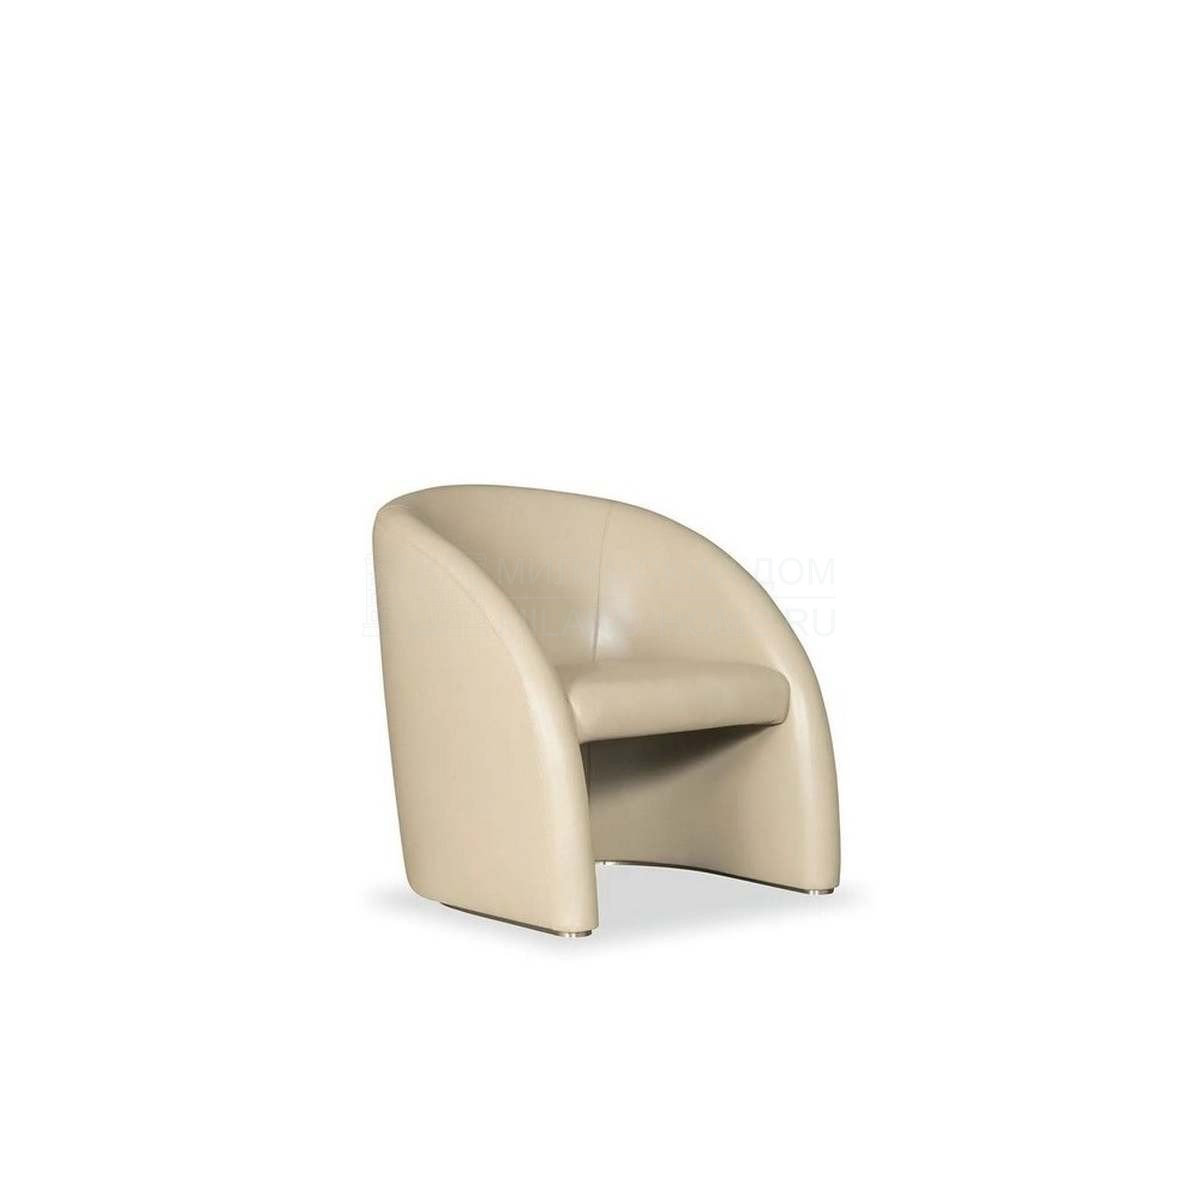 Кожаное кресло Julie armchair leather из Италии фабрики ARMANI CASA